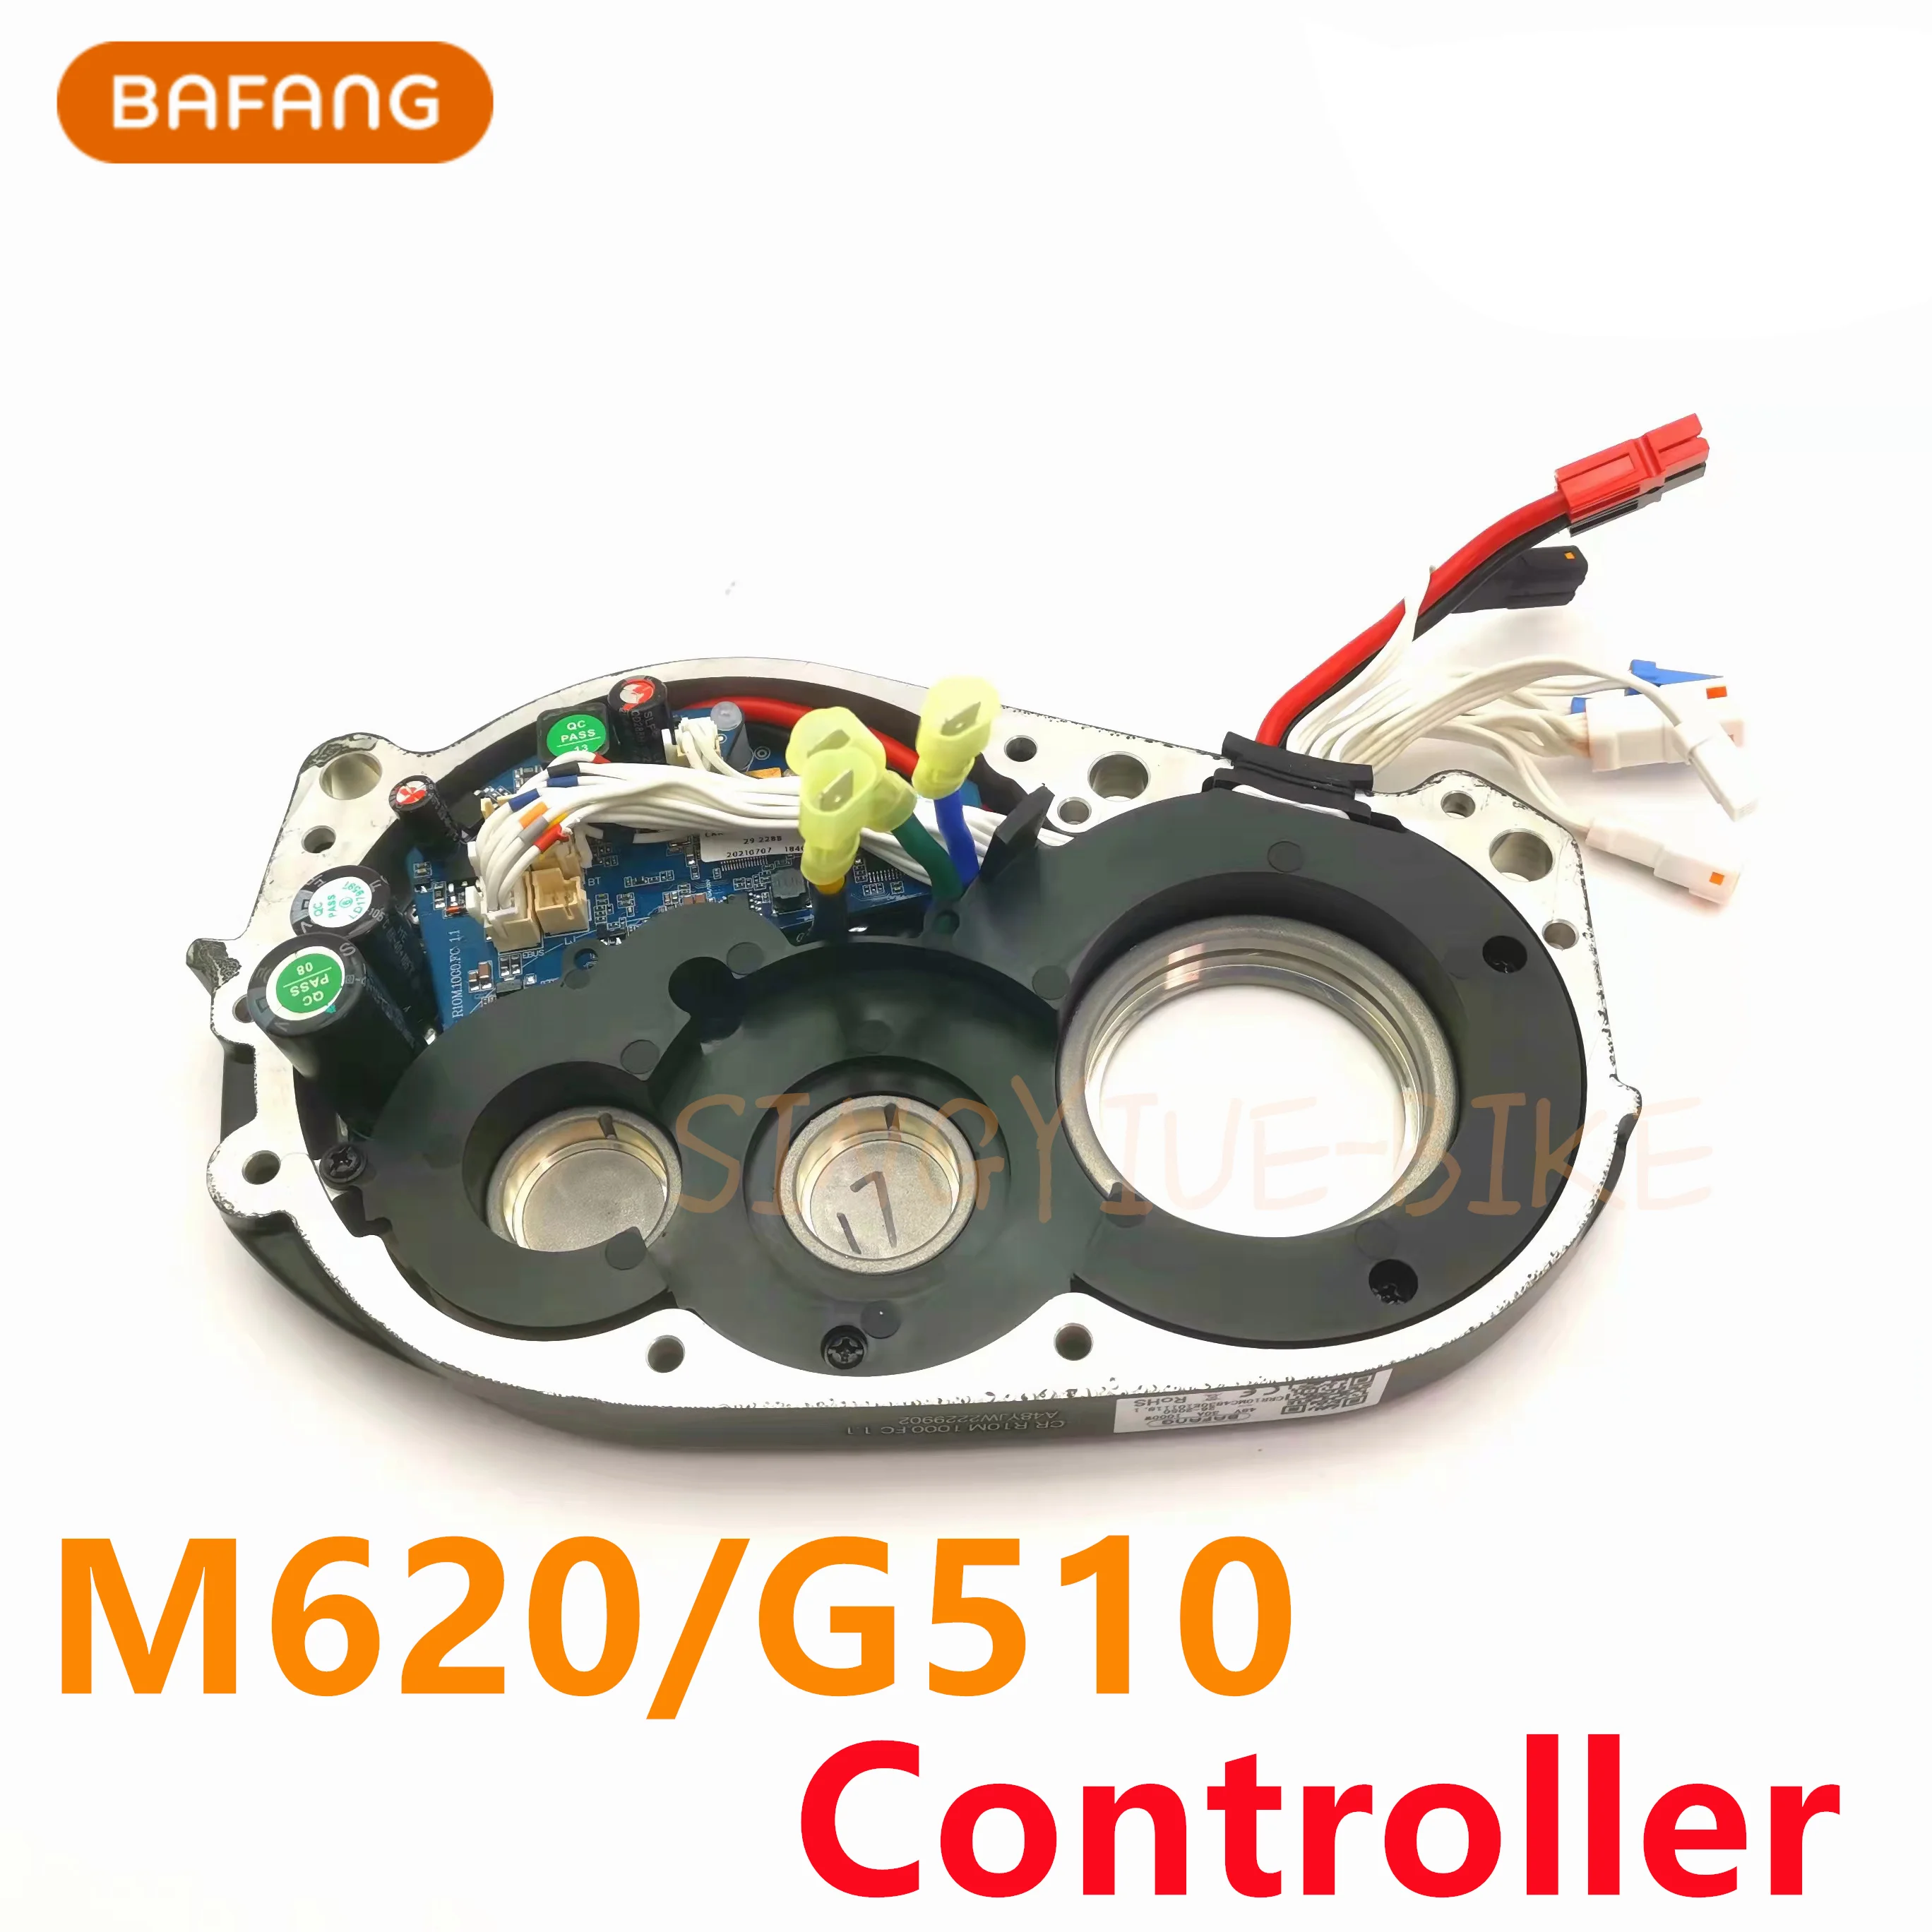 

BAFANG Mid Motor Controller 48V30A M620/G510 UART/CAN Protocol Controller 1000W Motor Controller